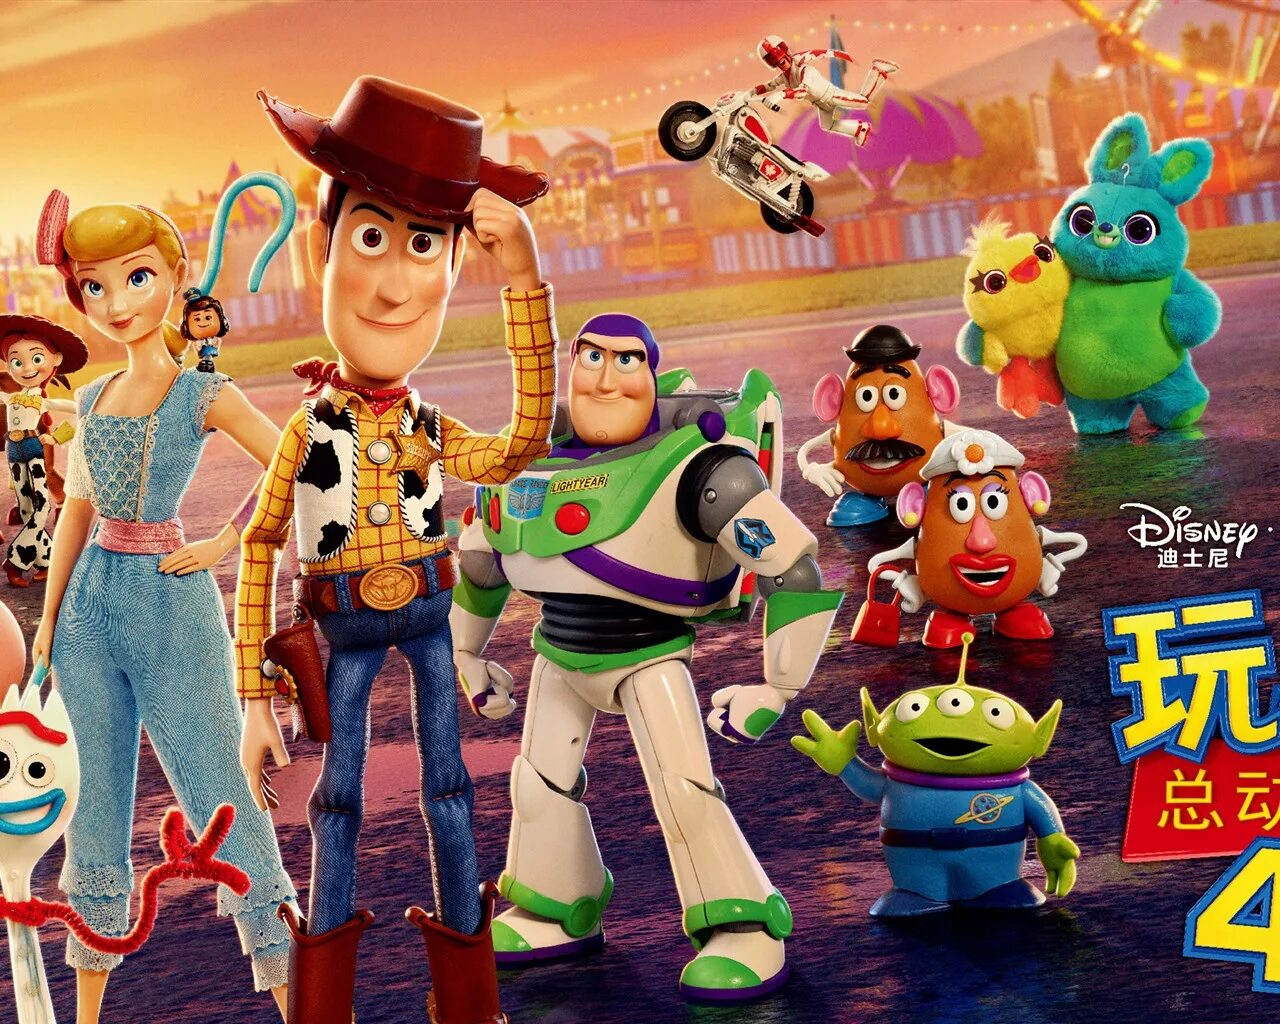 Toy story 4. 2019 - Toy story 4. история игрушек 4. Toy story 4 poster. «История игрушек 4», Мистер картофелина. Movie toy